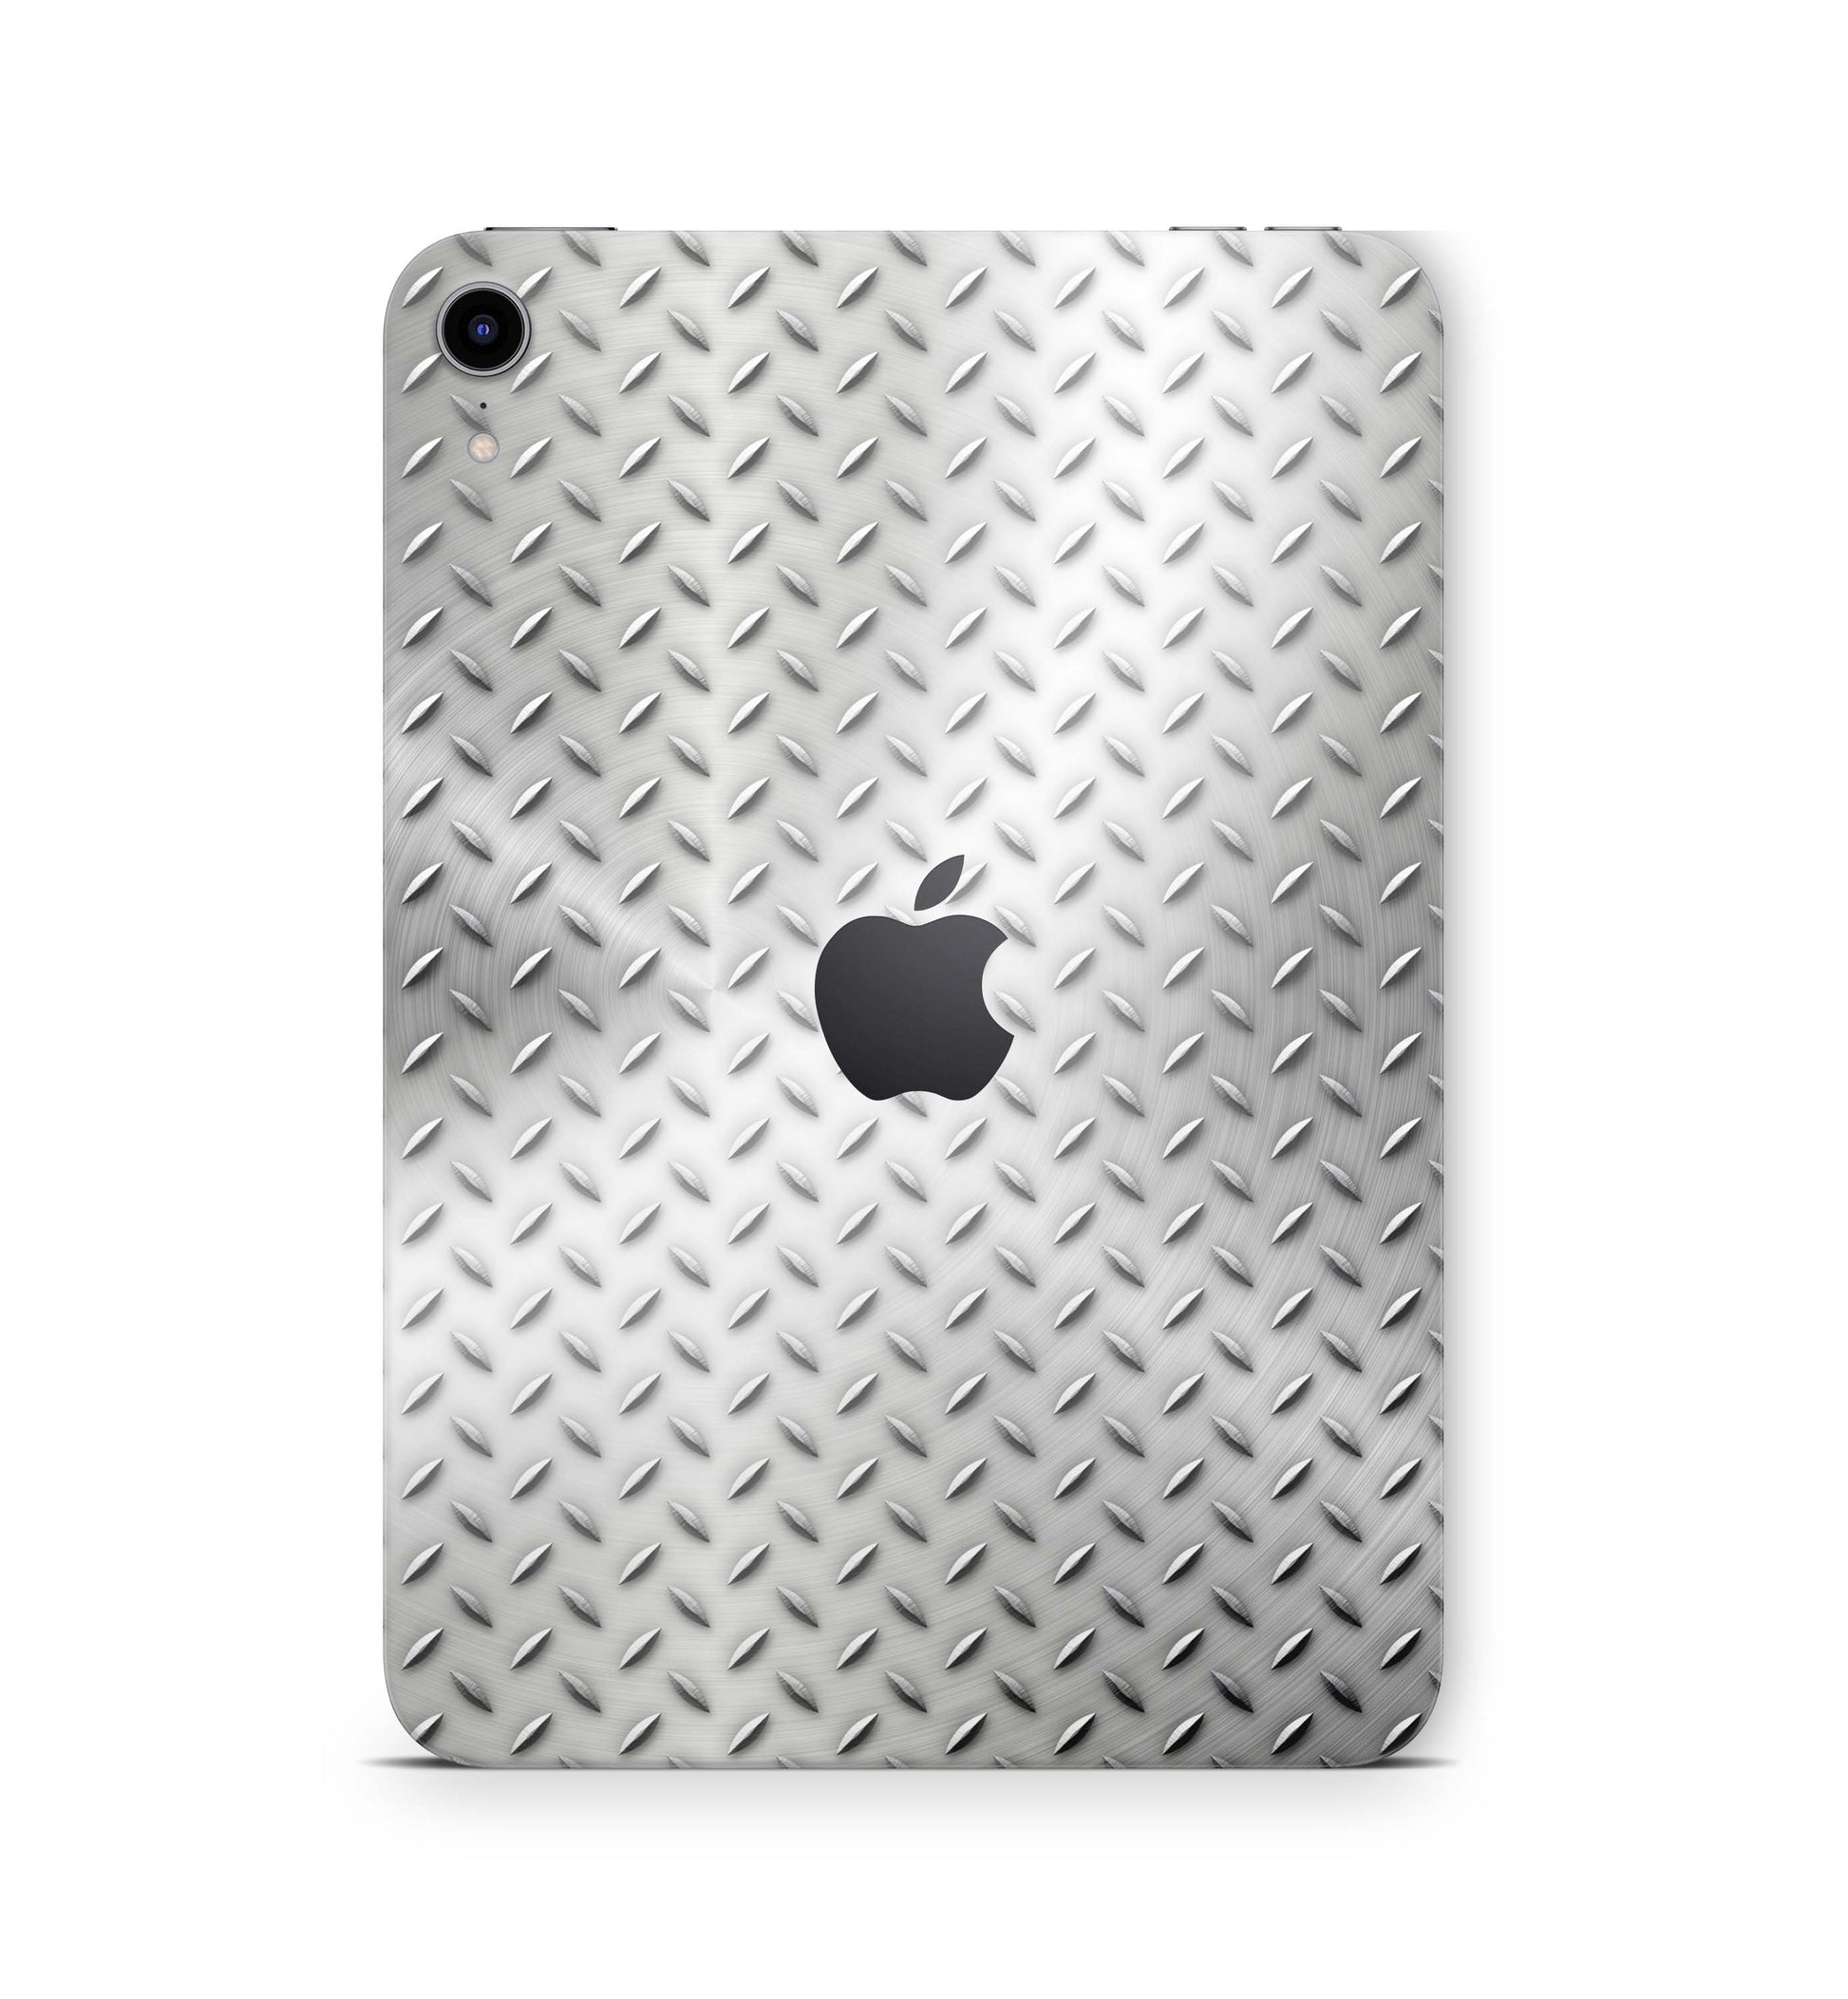 iPad Air Skin Design Cover Folie Vinyl Skins & Wraps für alle iPad Air Modelle Aufkleber Skins4u Stahl  